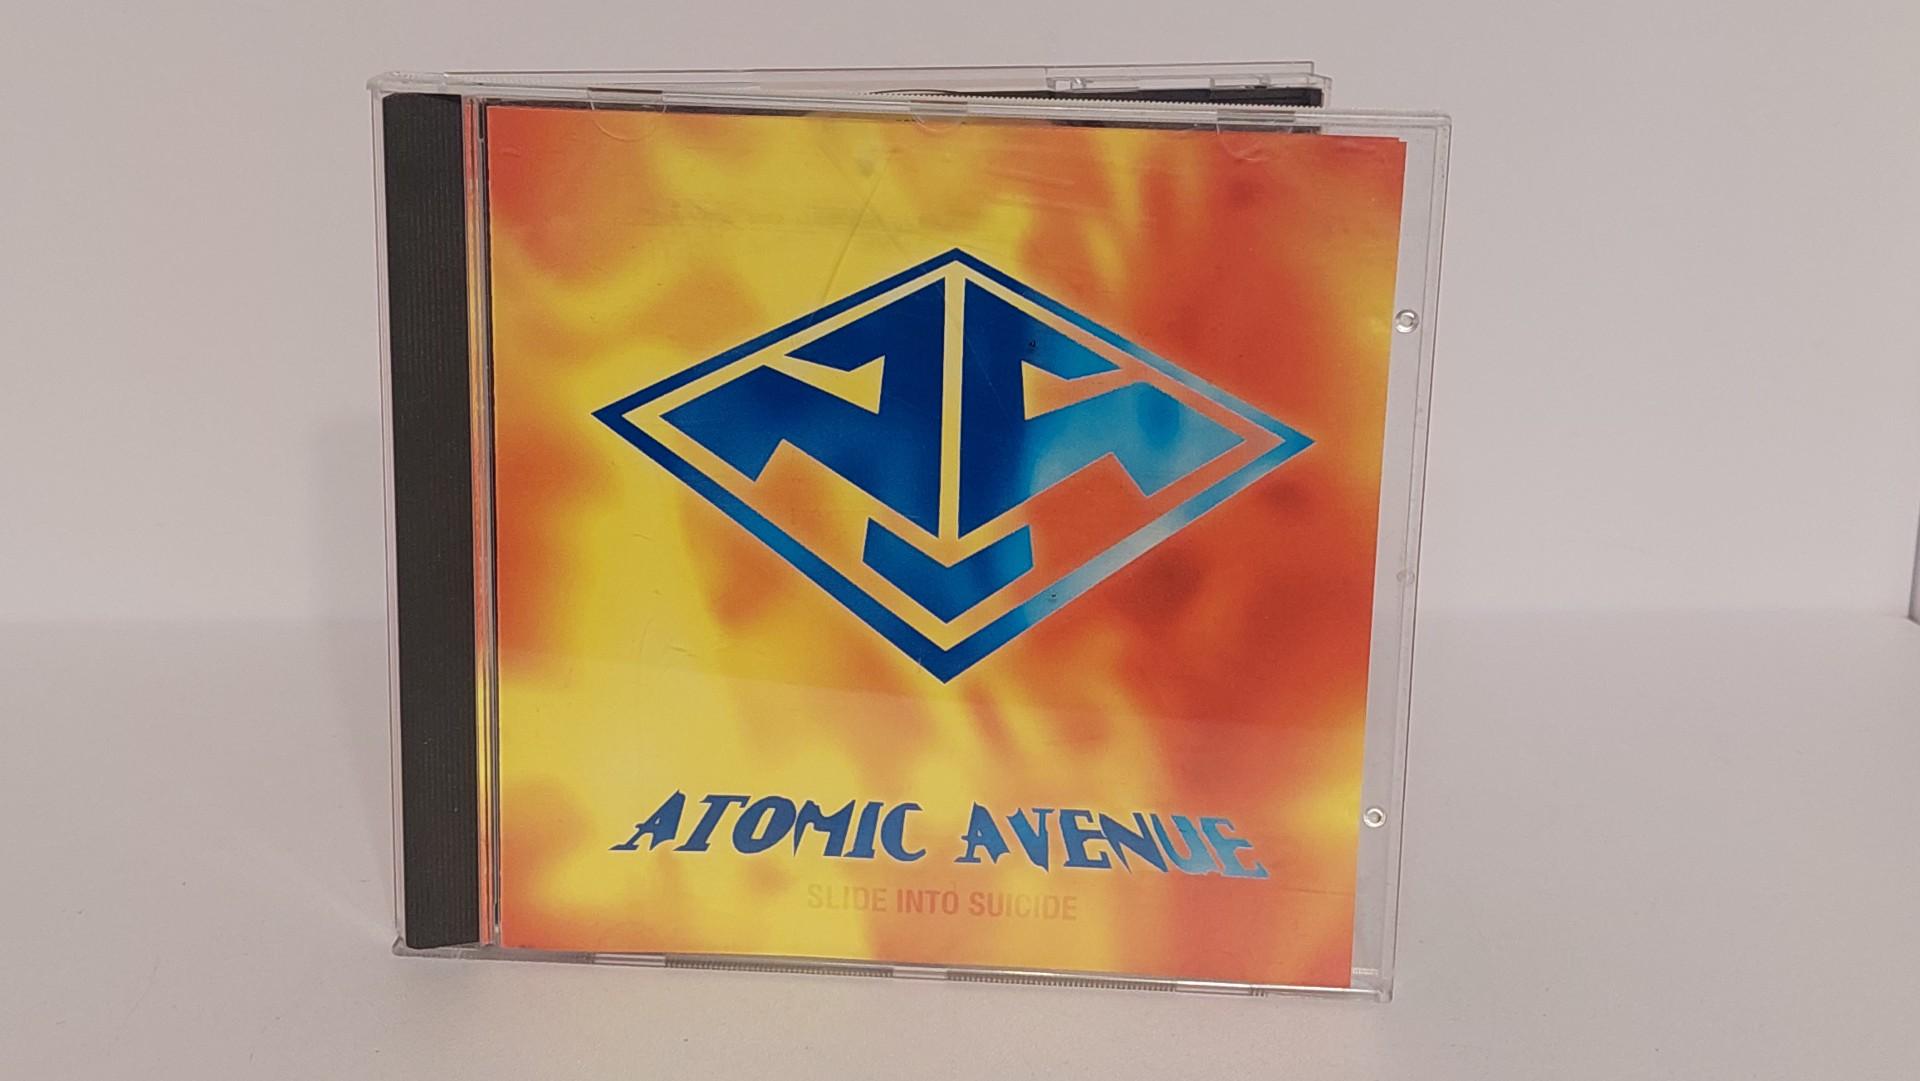 Naudotas audio CD Atomic Avenue - Slide Into Suicide